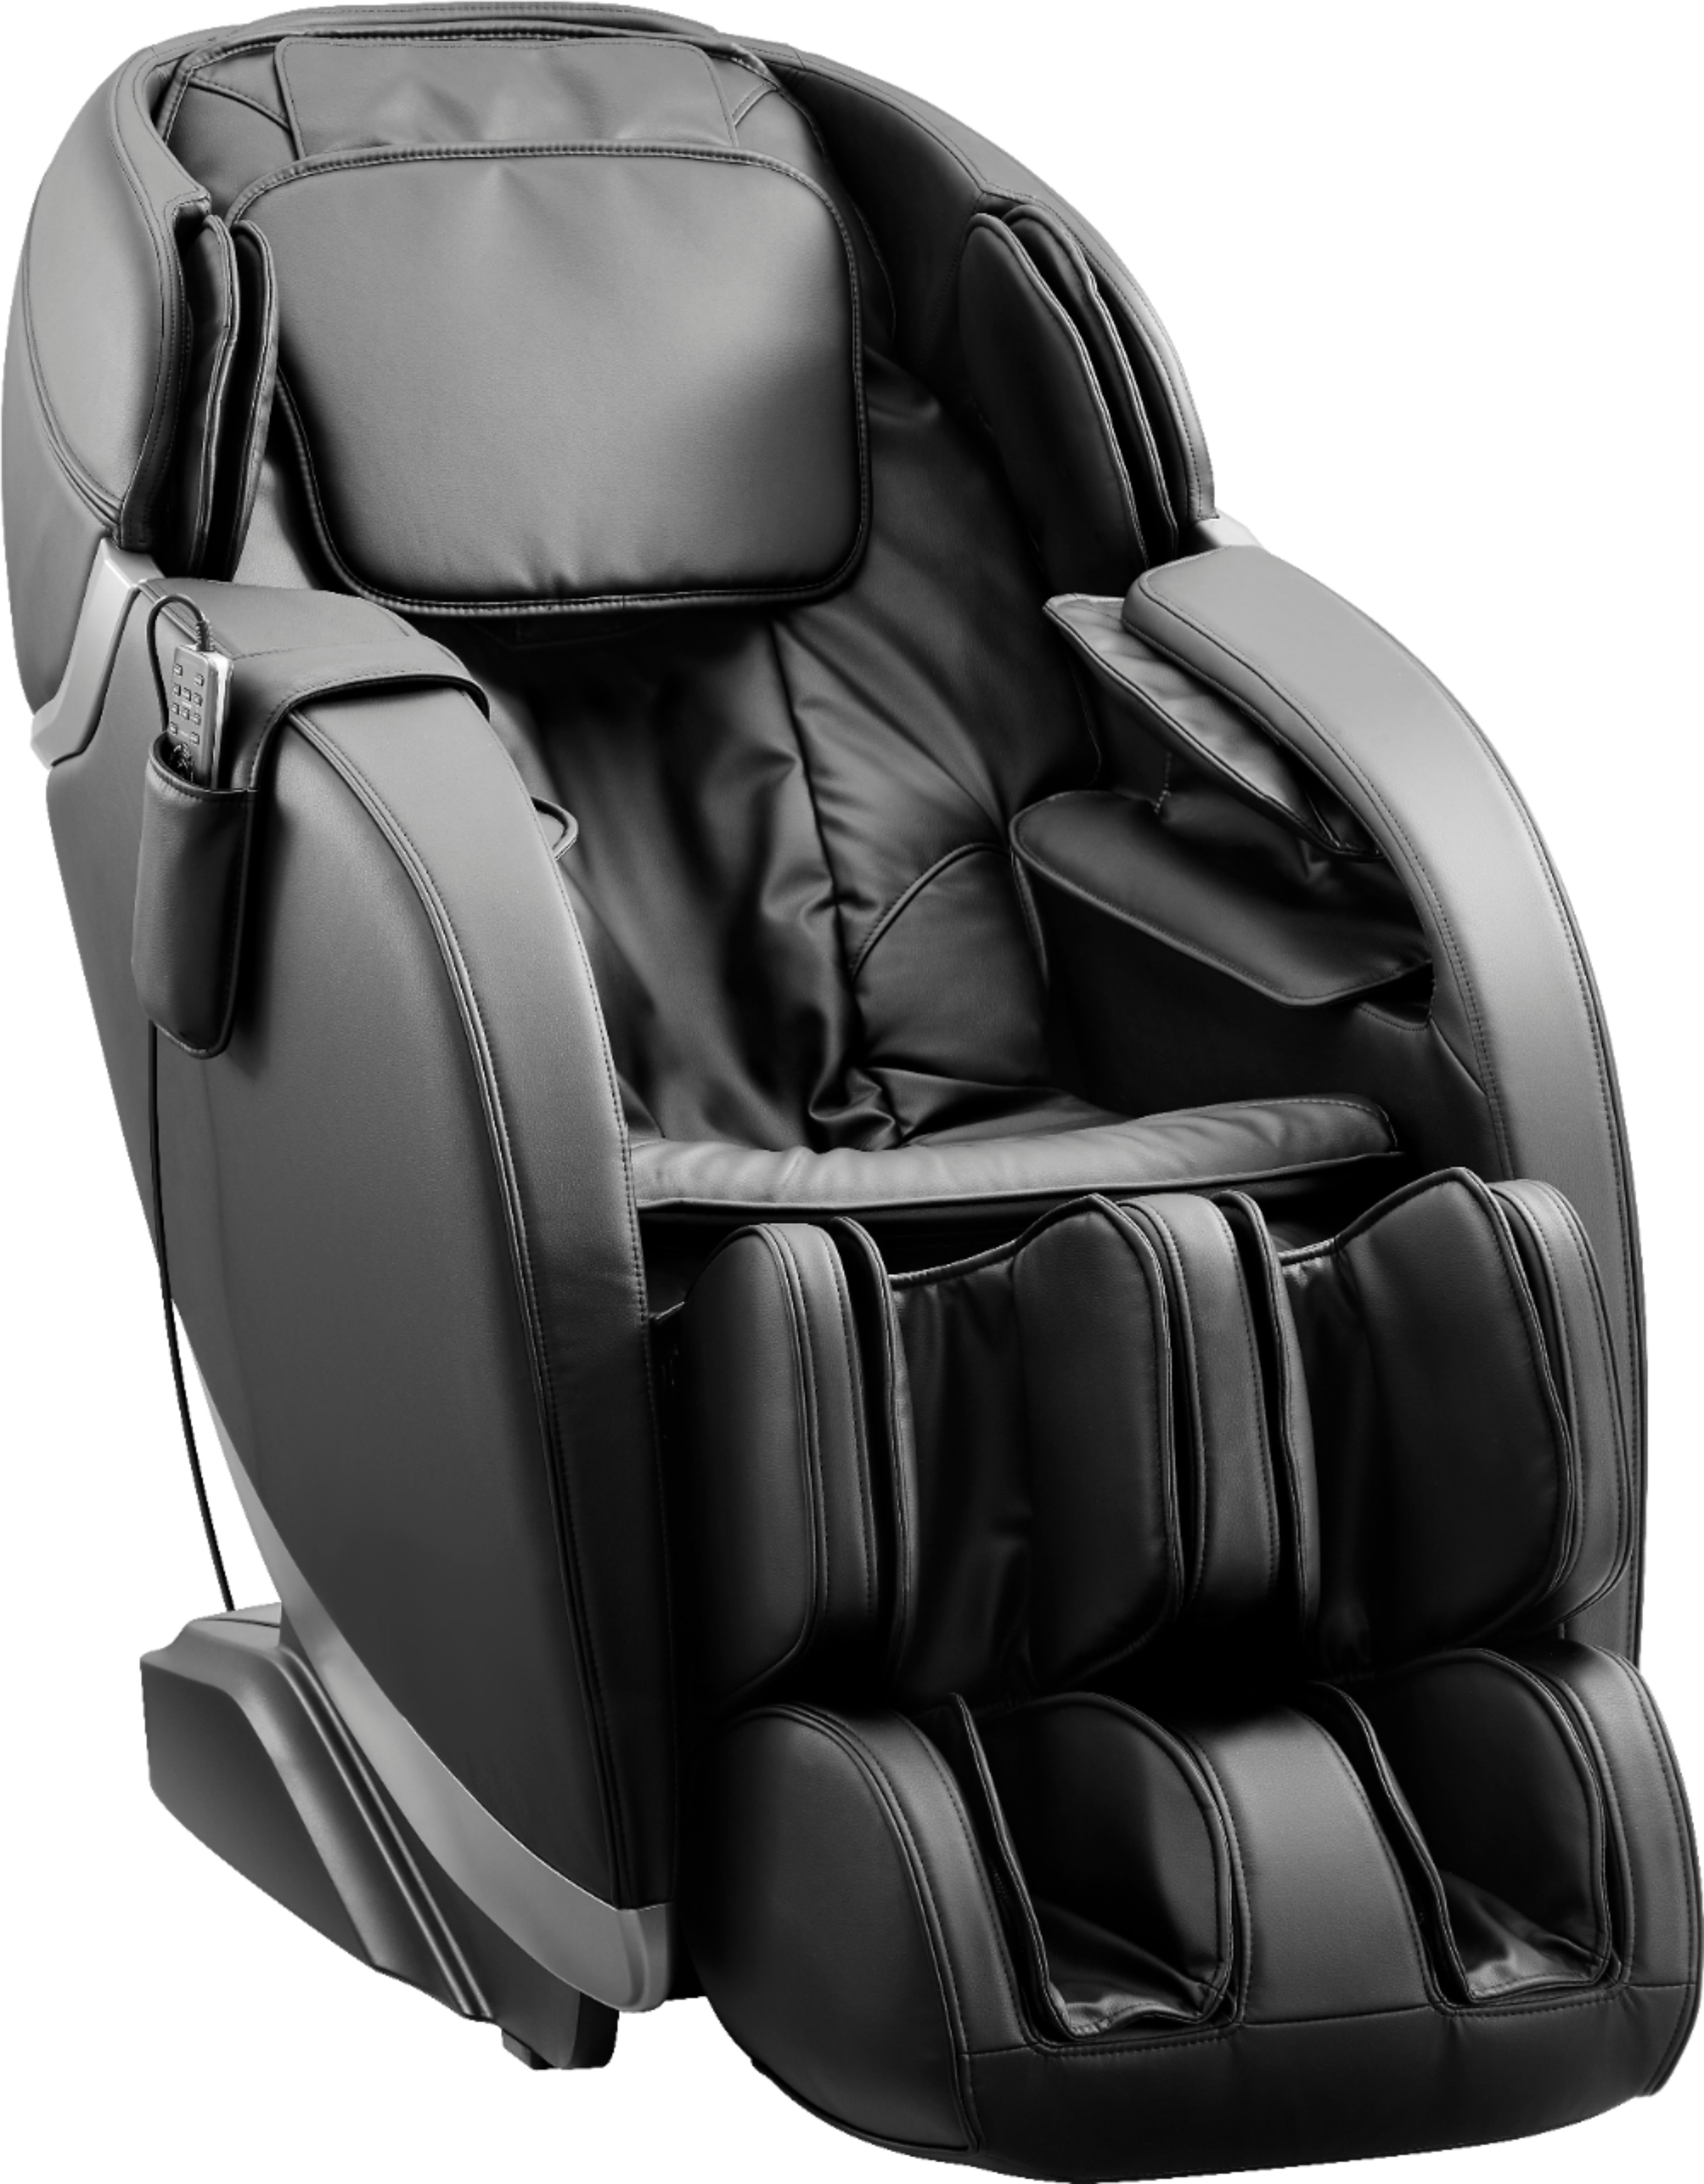 Insignia 2D Zero Gravity Full Body Massage Chair - $1,249.99 + Free Shipping $1249.99